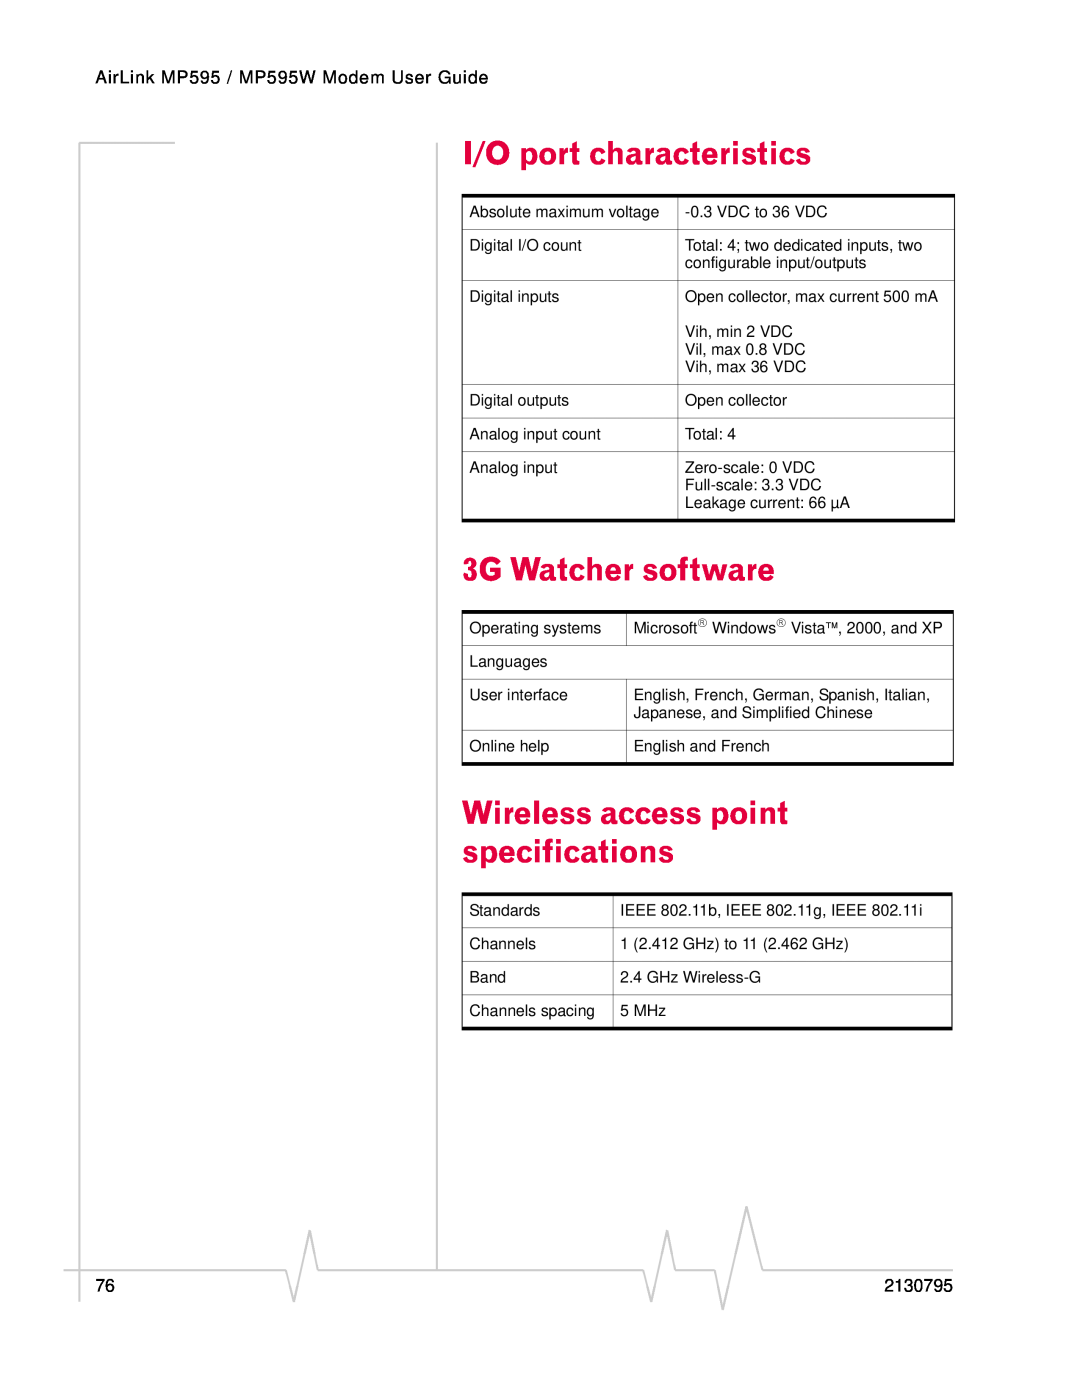 Sierra Wireless MP595W I/O port characteristics, Wireless access point specifications, 3G Watcher software, 2130795 